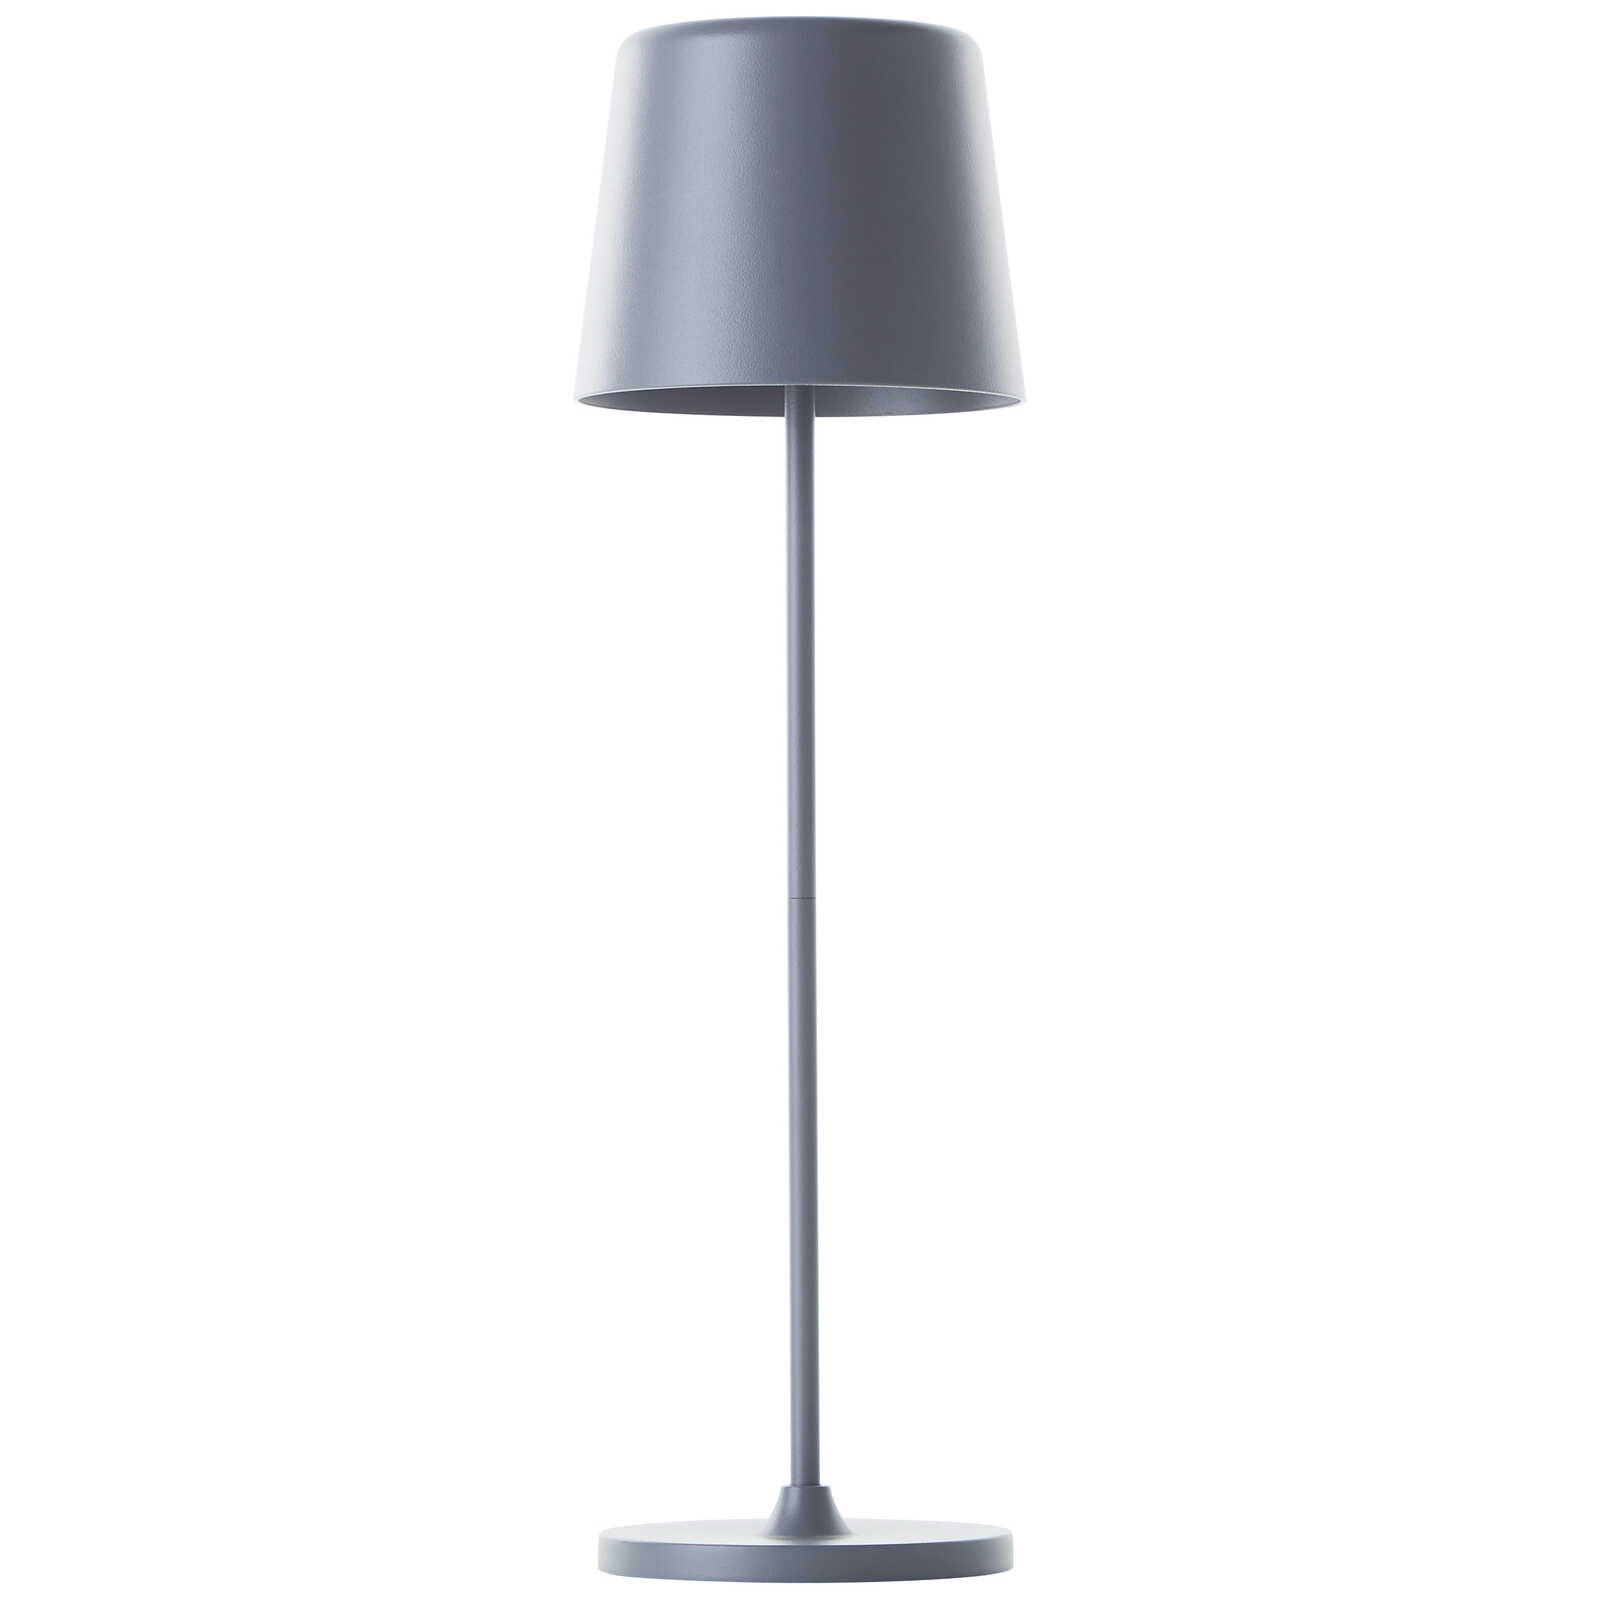             Lampe de table en métal - Cosy 4 - Gris
        